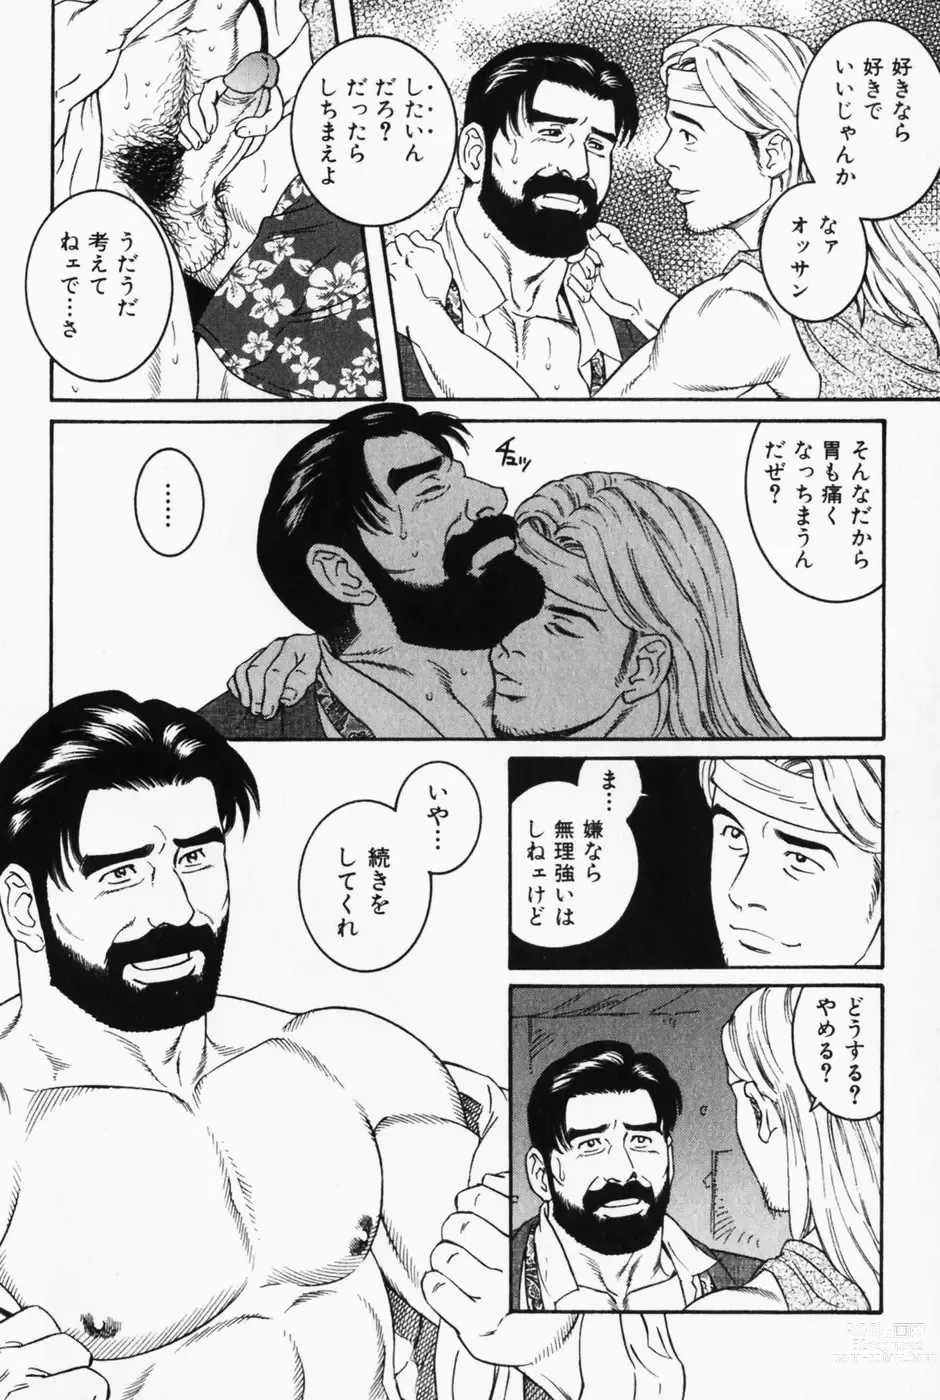 Page 12 of manga Shinkei-sei Ien